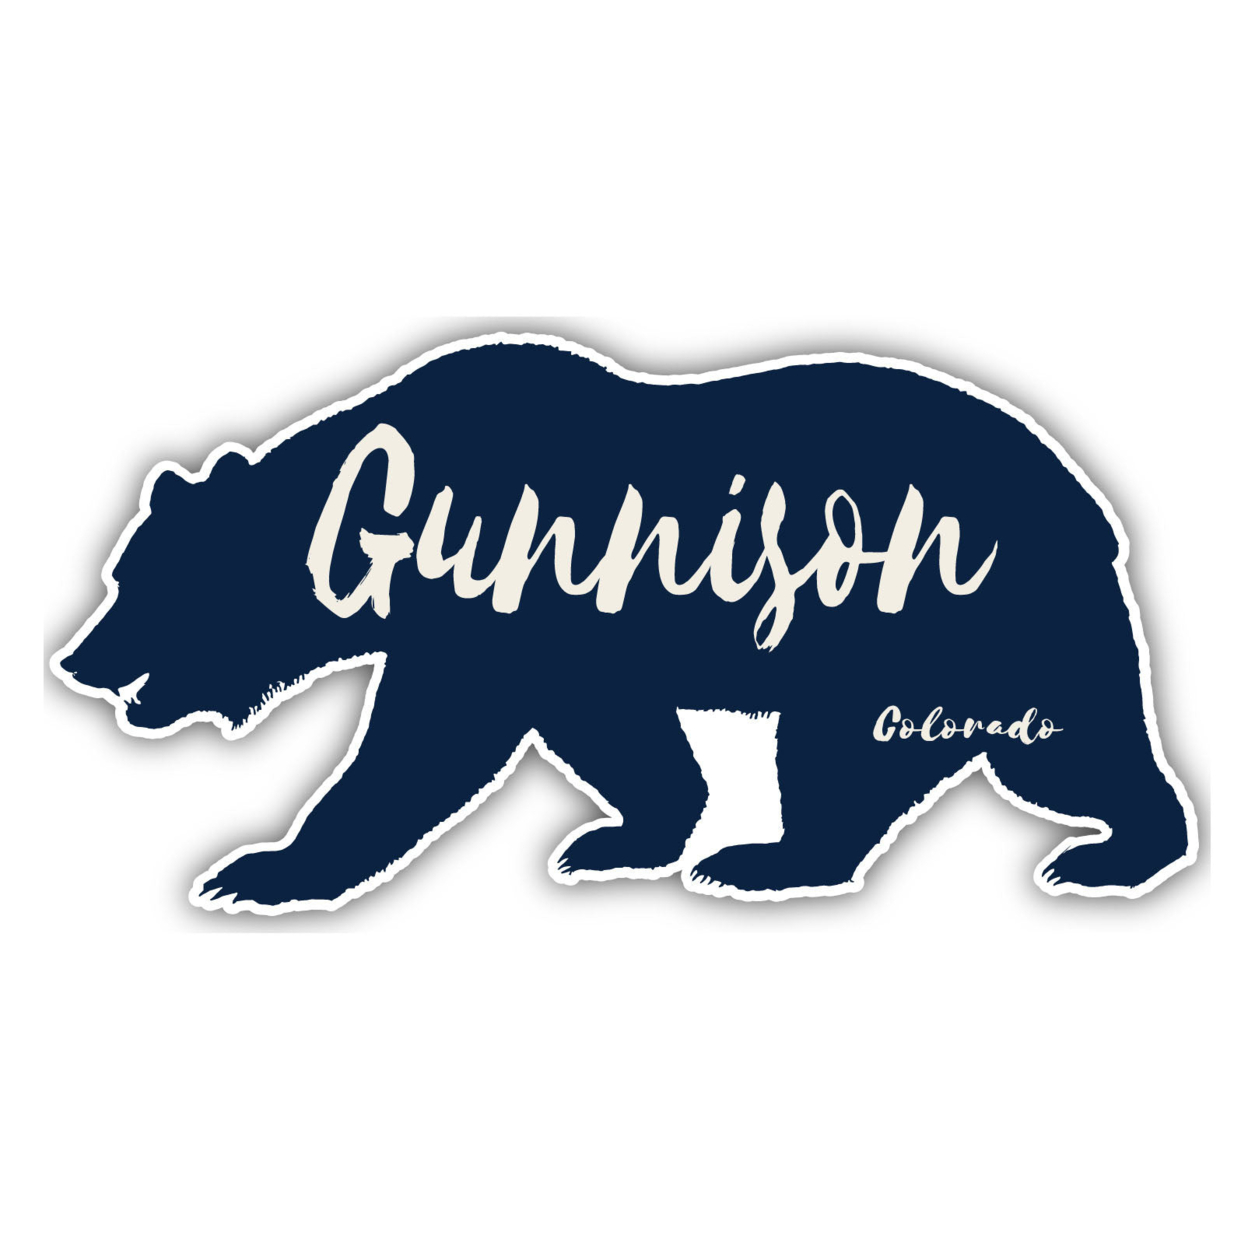 Gunnison Colorado Souvenir Decorative Stickers (Choose Theme And Size) - 4-Pack, 8-Inch, Adventures Awaits